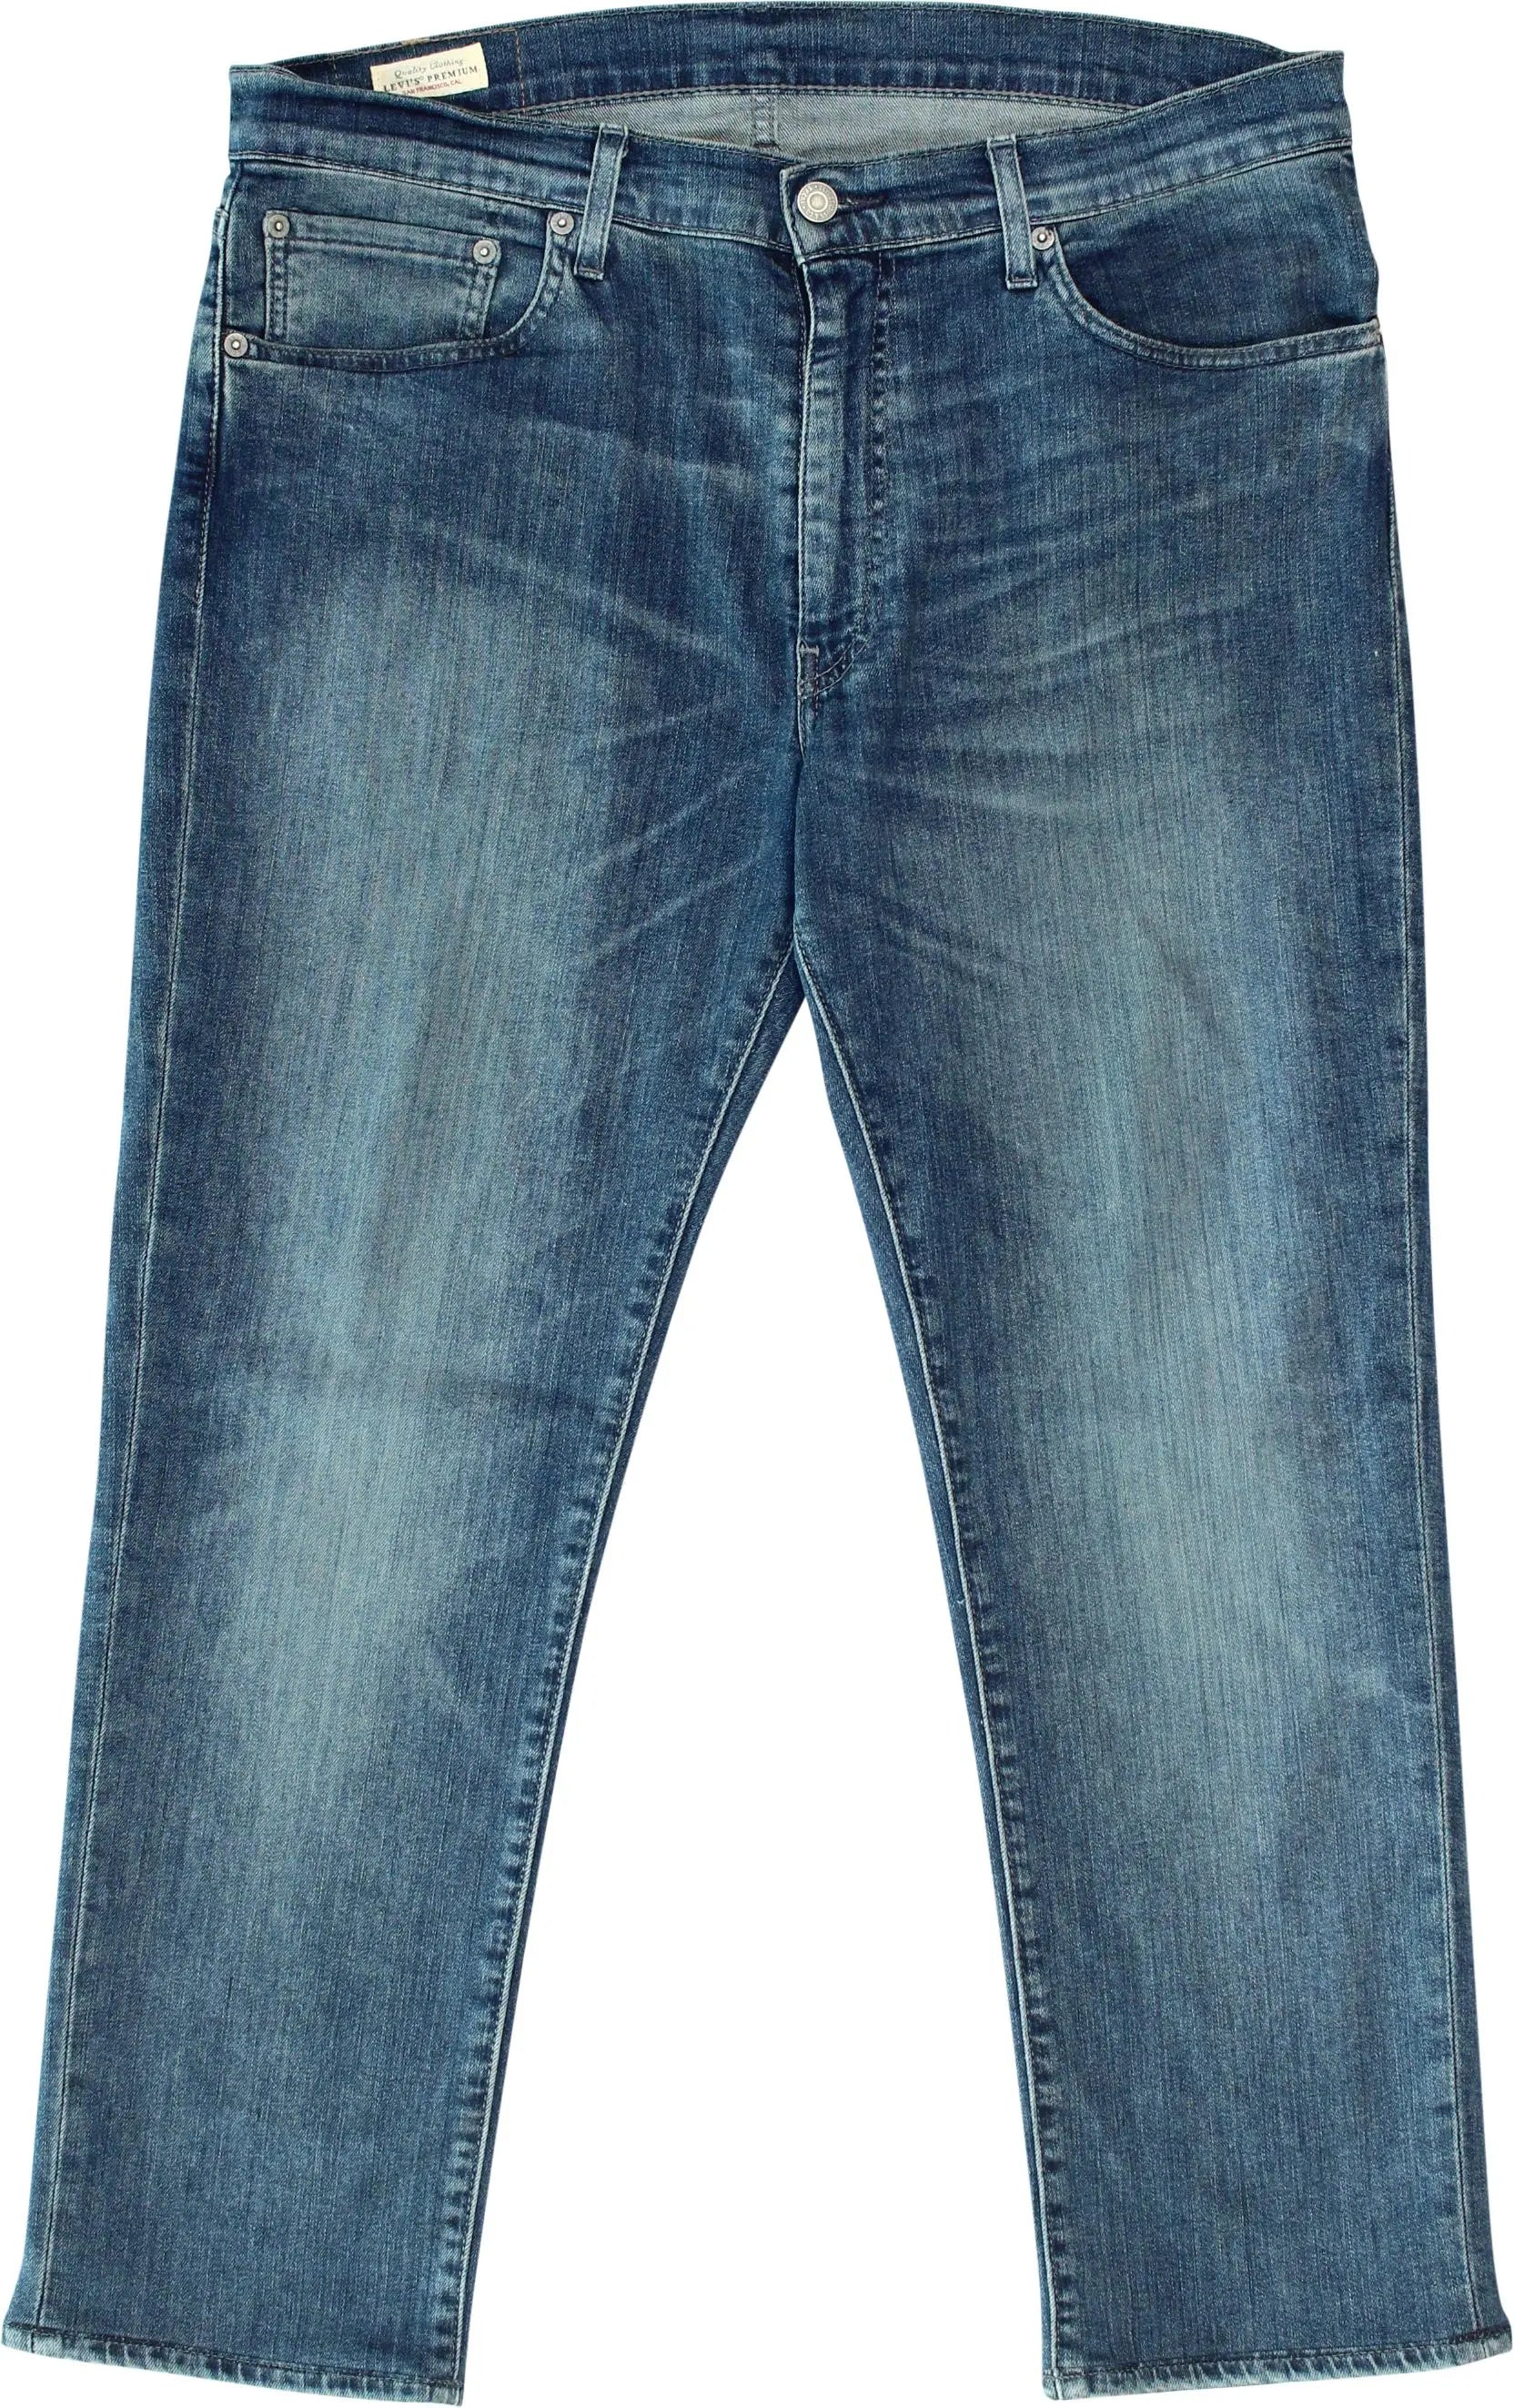 Levi's - Levi's 511 Slim Fit Jeans- ThriftTale.com - Vintage and second handclothing